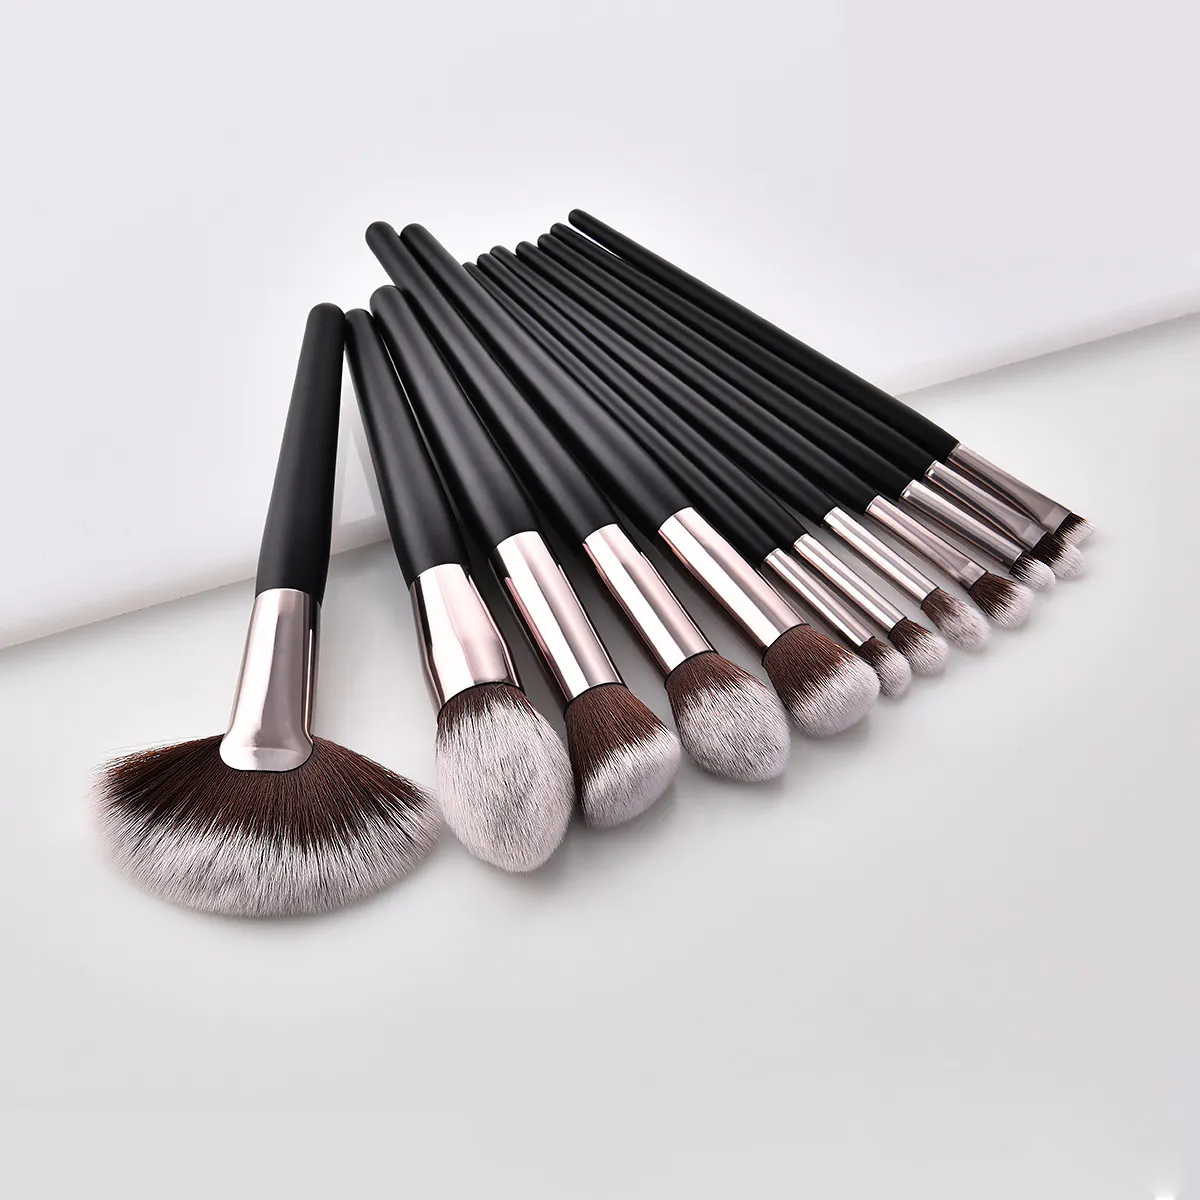 Professional Black Makeup brush set 40pcs big face brush Powder Foundation Contour eye brush